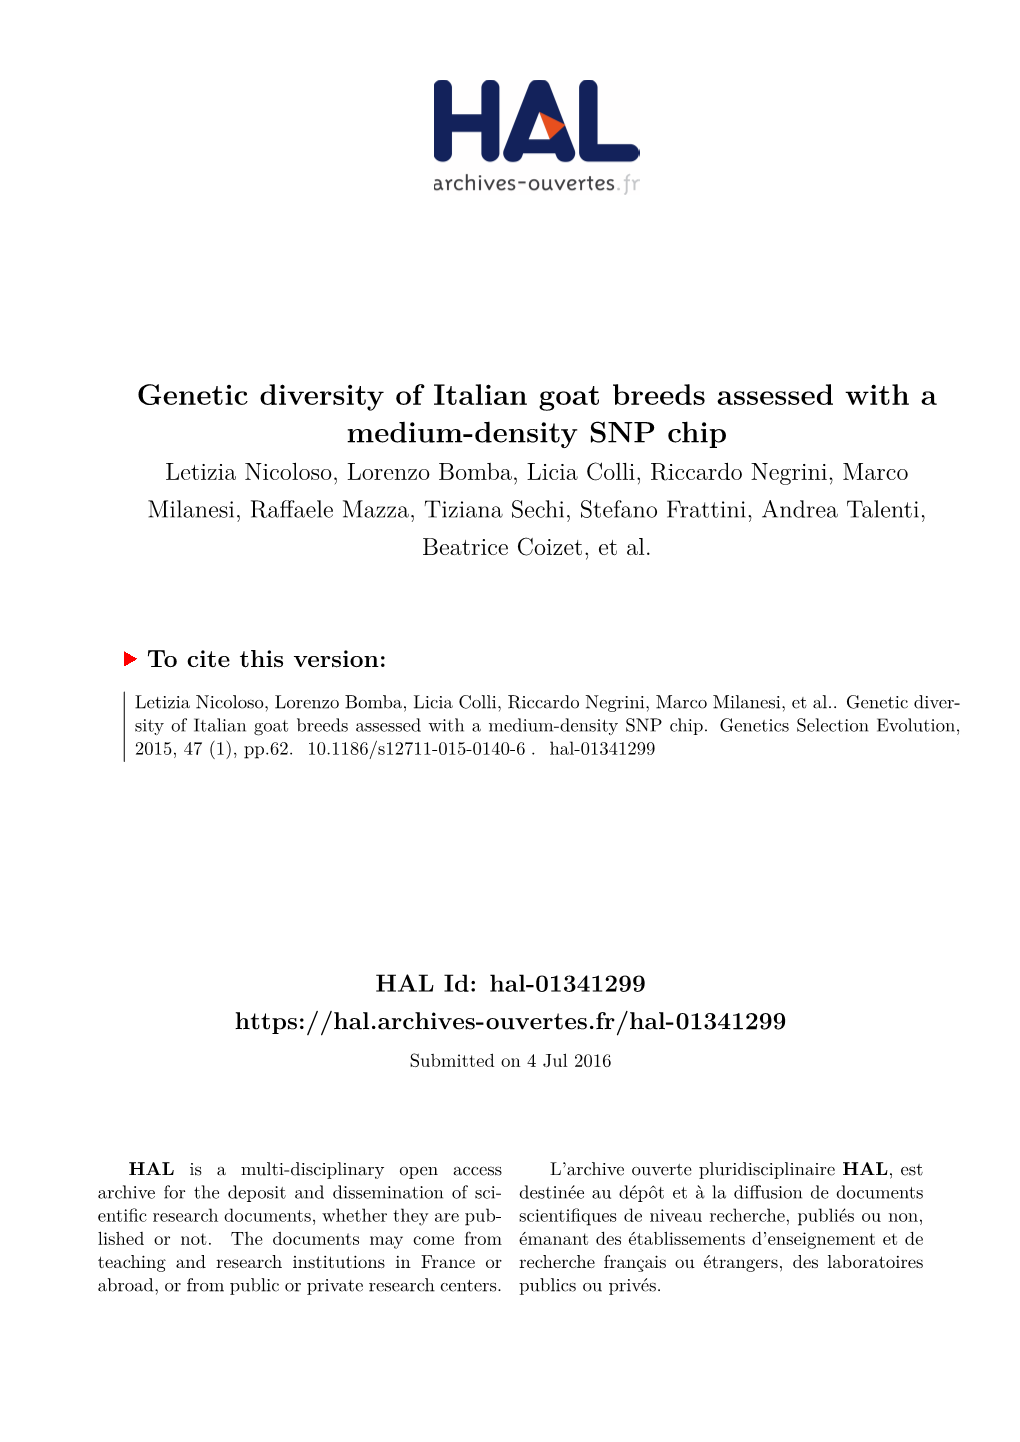 Genetic Diversity of Italian Goat Breeds Assessed with a Medium-Density